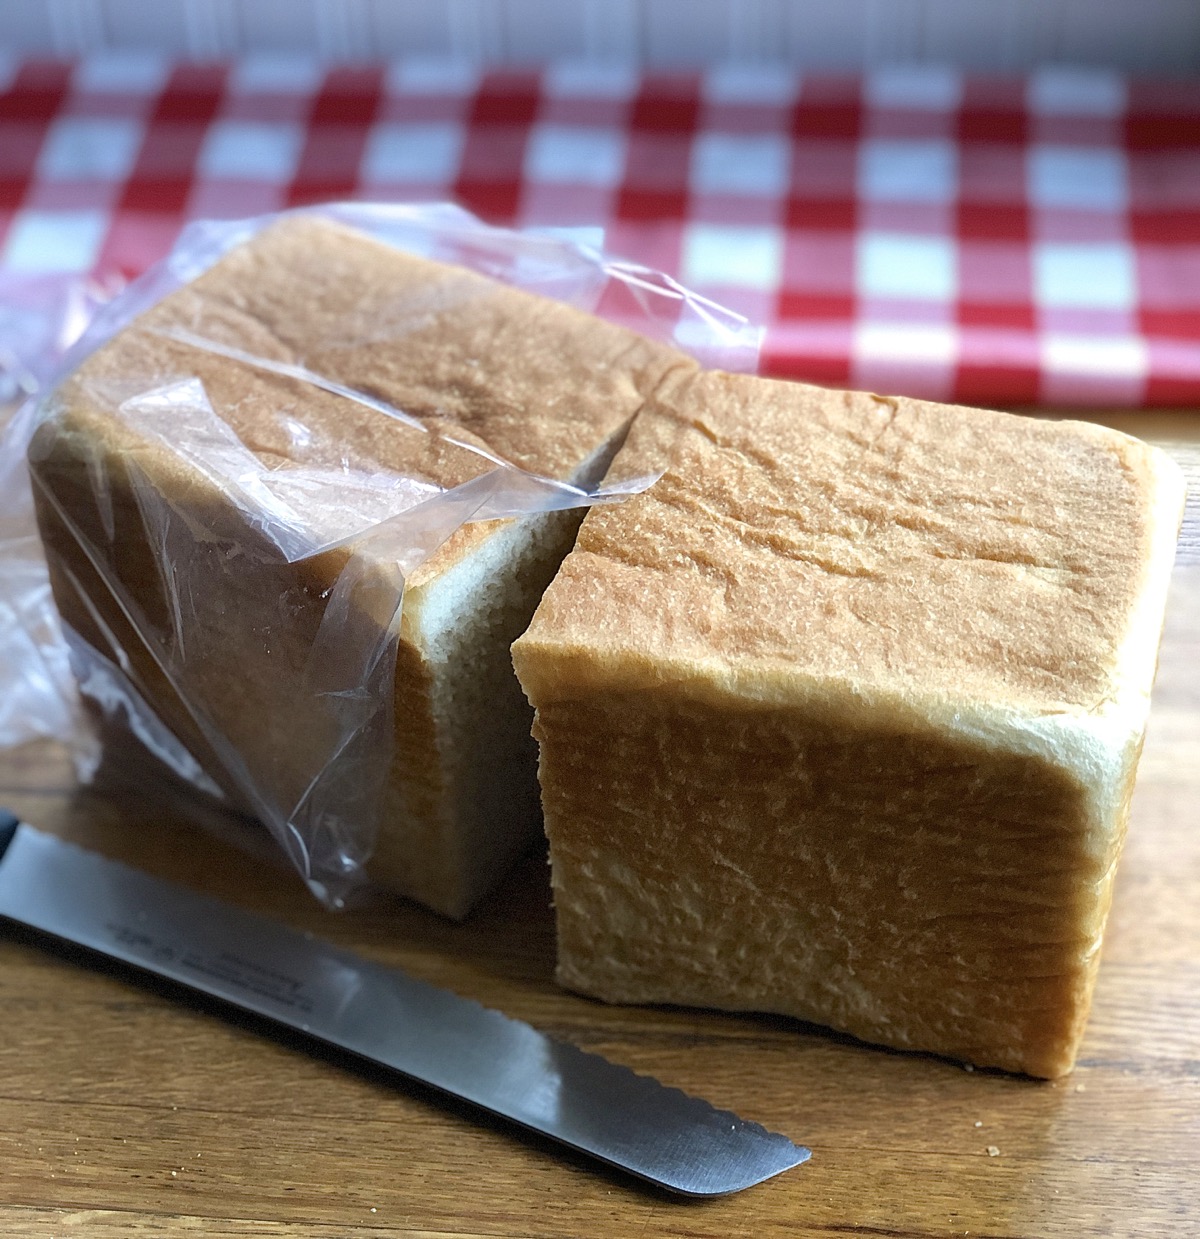 Loaf of sandwich bread cut in half, one half in plastic bag.